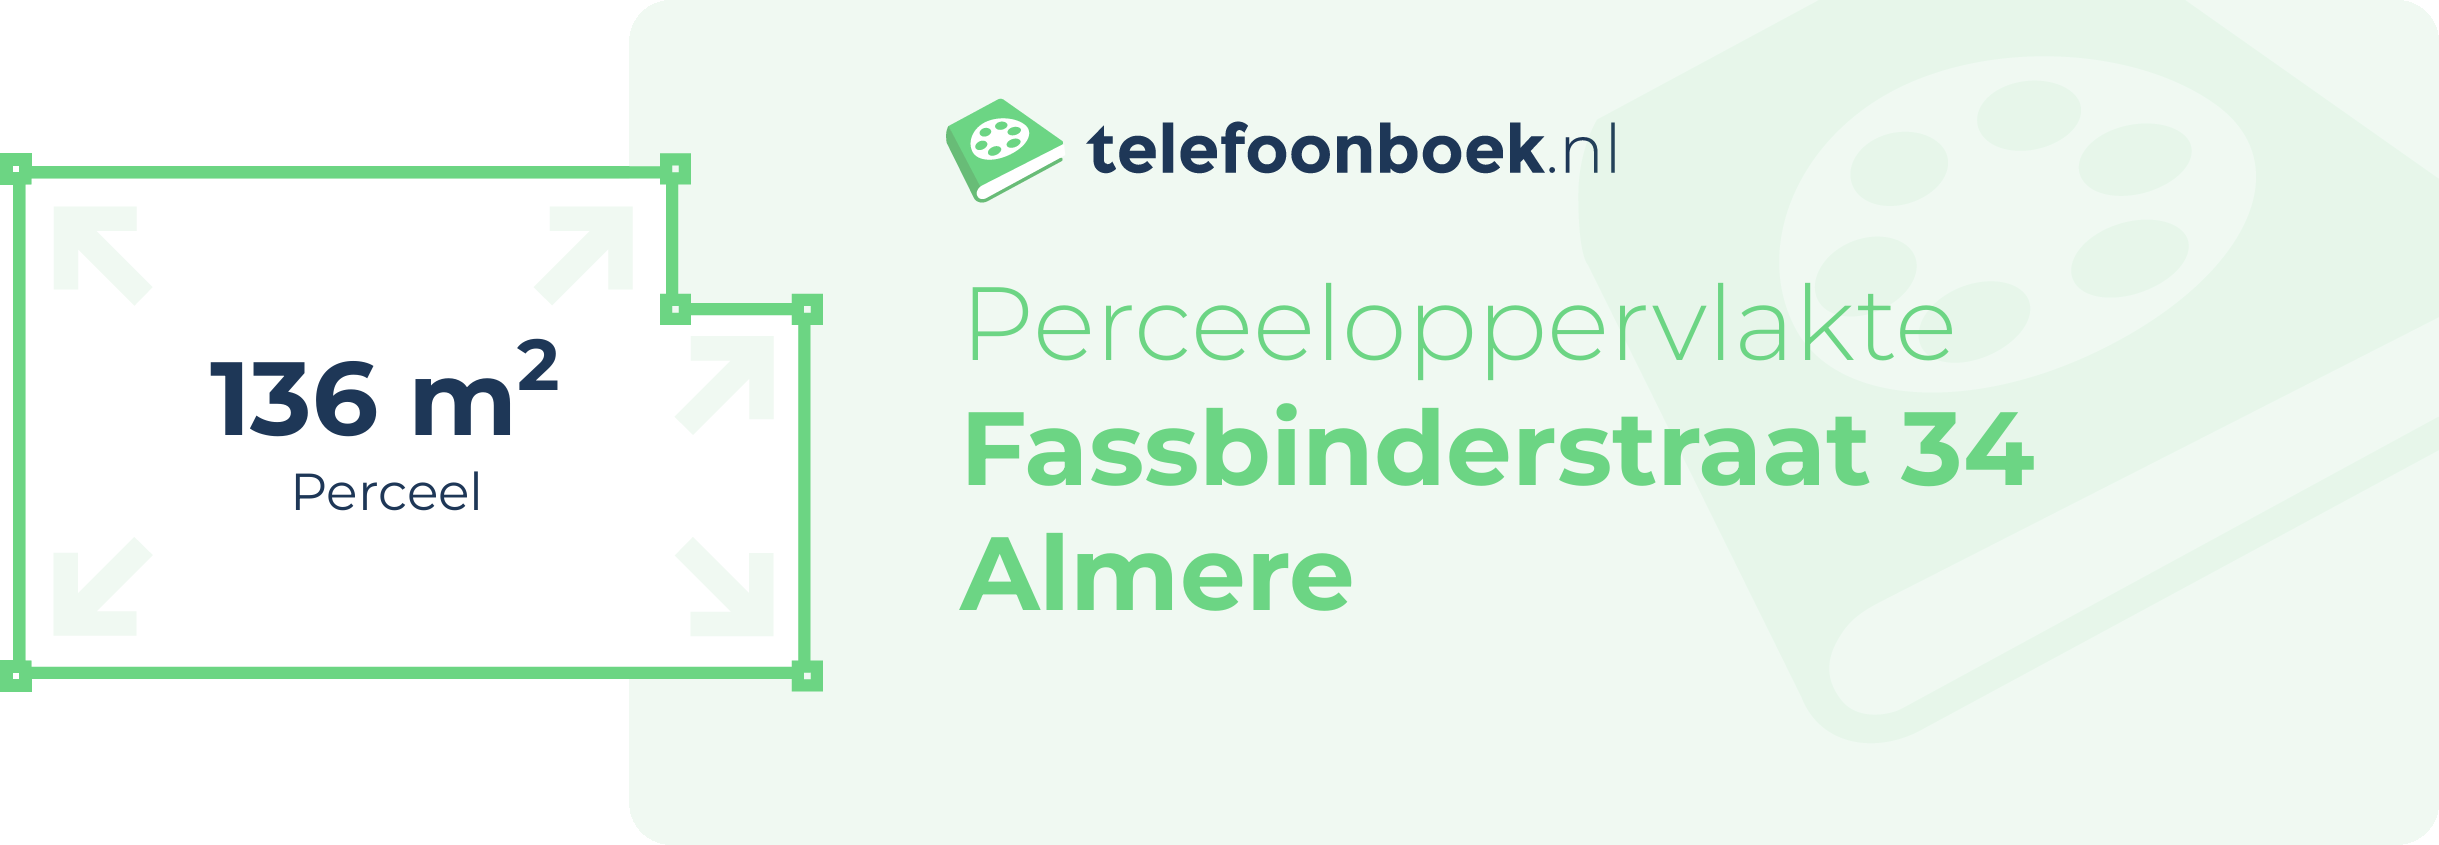 Perceeloppervlakte Fassbinderstraat 34 Almere